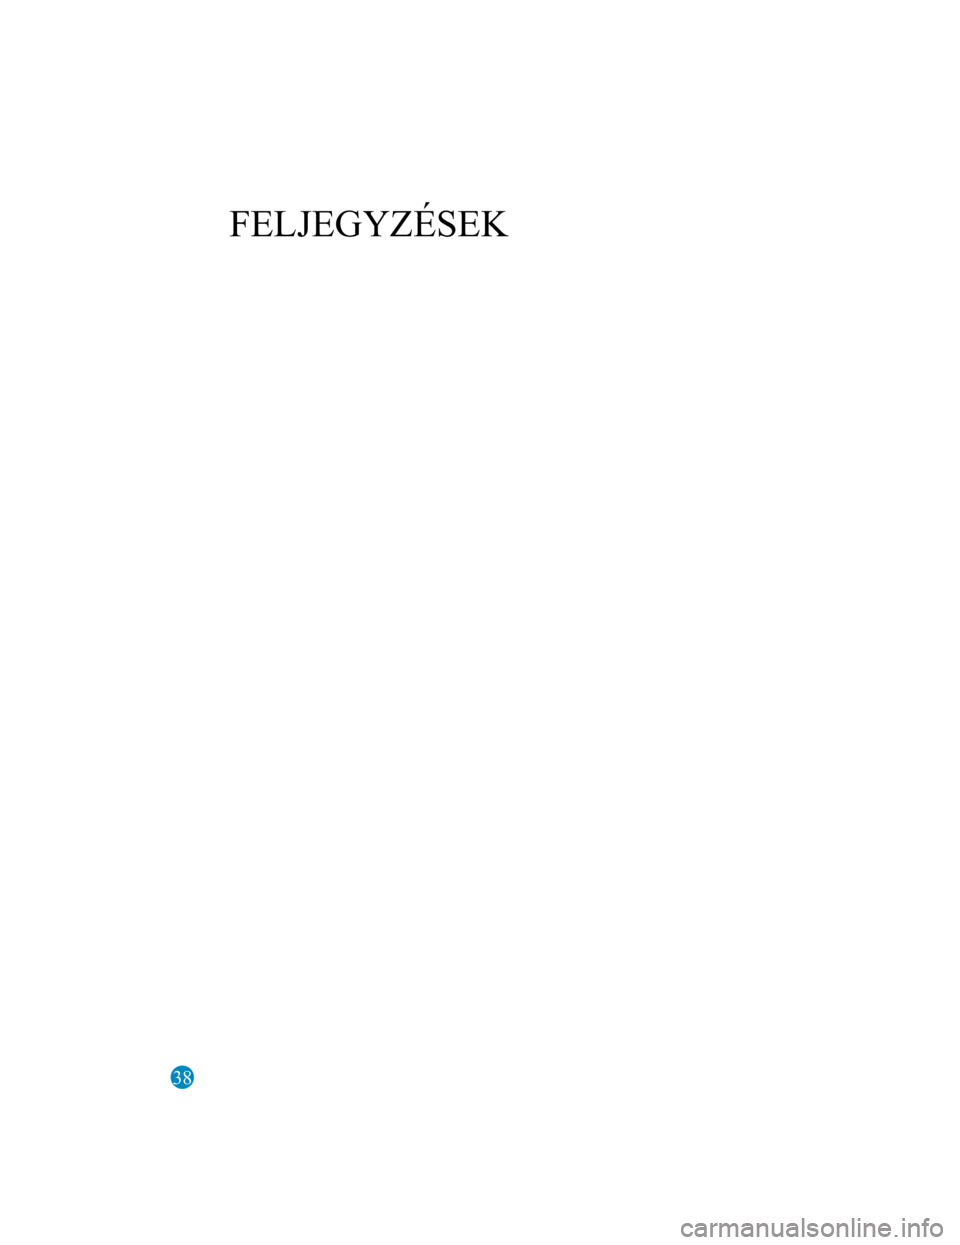 MAZDA MODEL 6 2017  Kezelési útmutató (in Hungarian) 38
FELJEGYZÉSEK
Form No. Mazda6 8FK7-EE-16F-HU+L_Edition1.pdf 